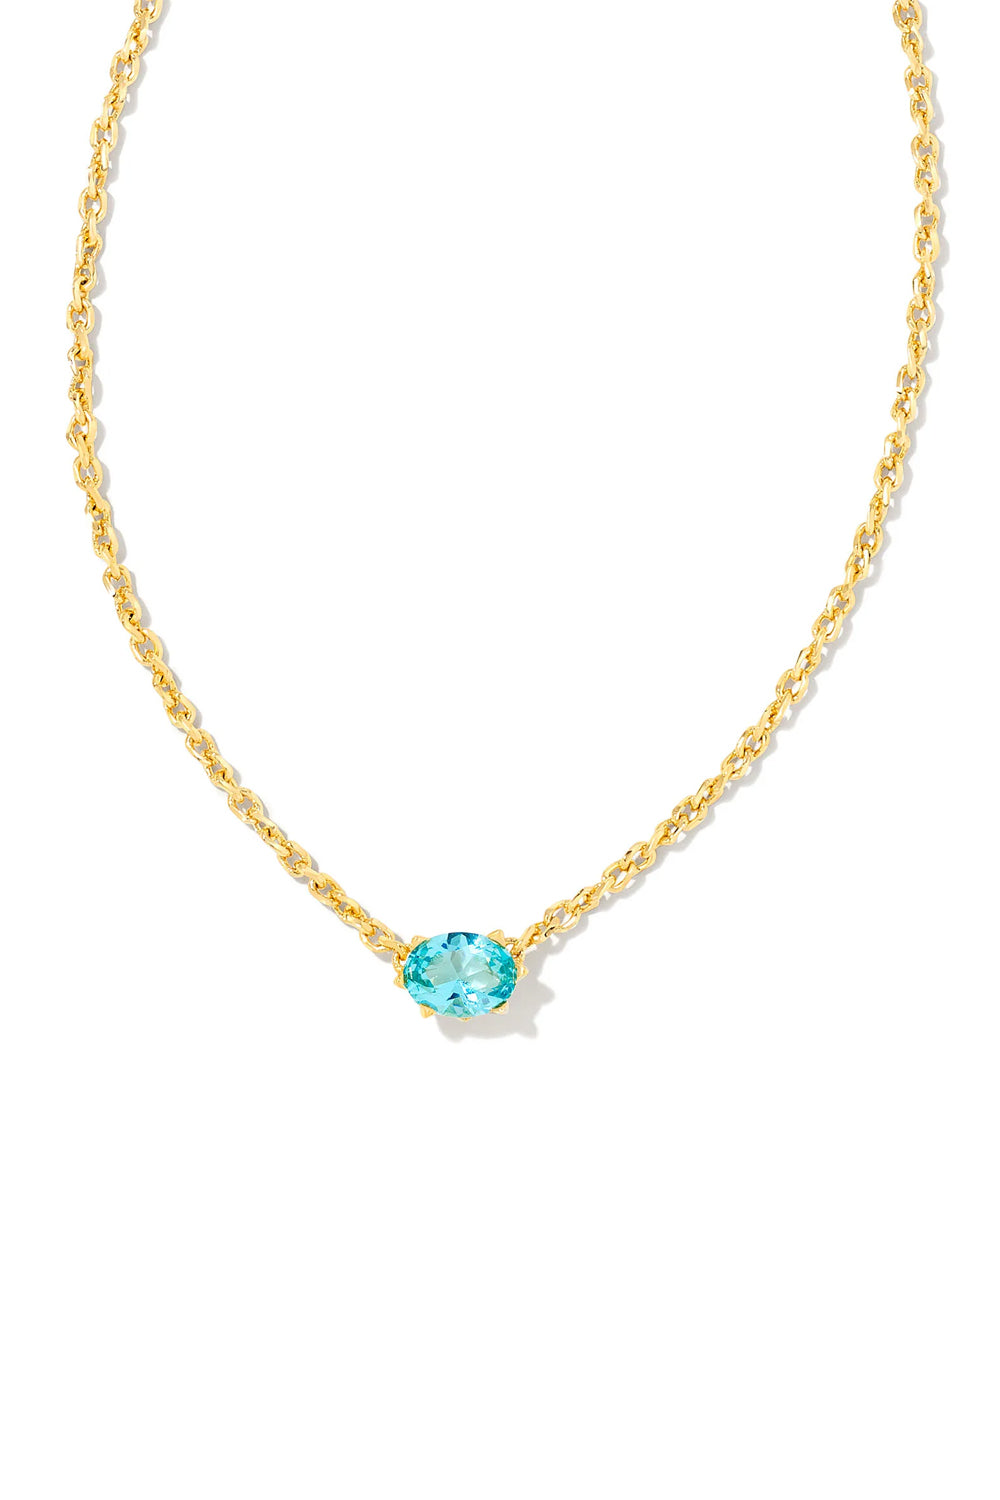 Kendra Scott: Cailin Gold Crystal Pendant Necklace - Aqua | Makk Fashions